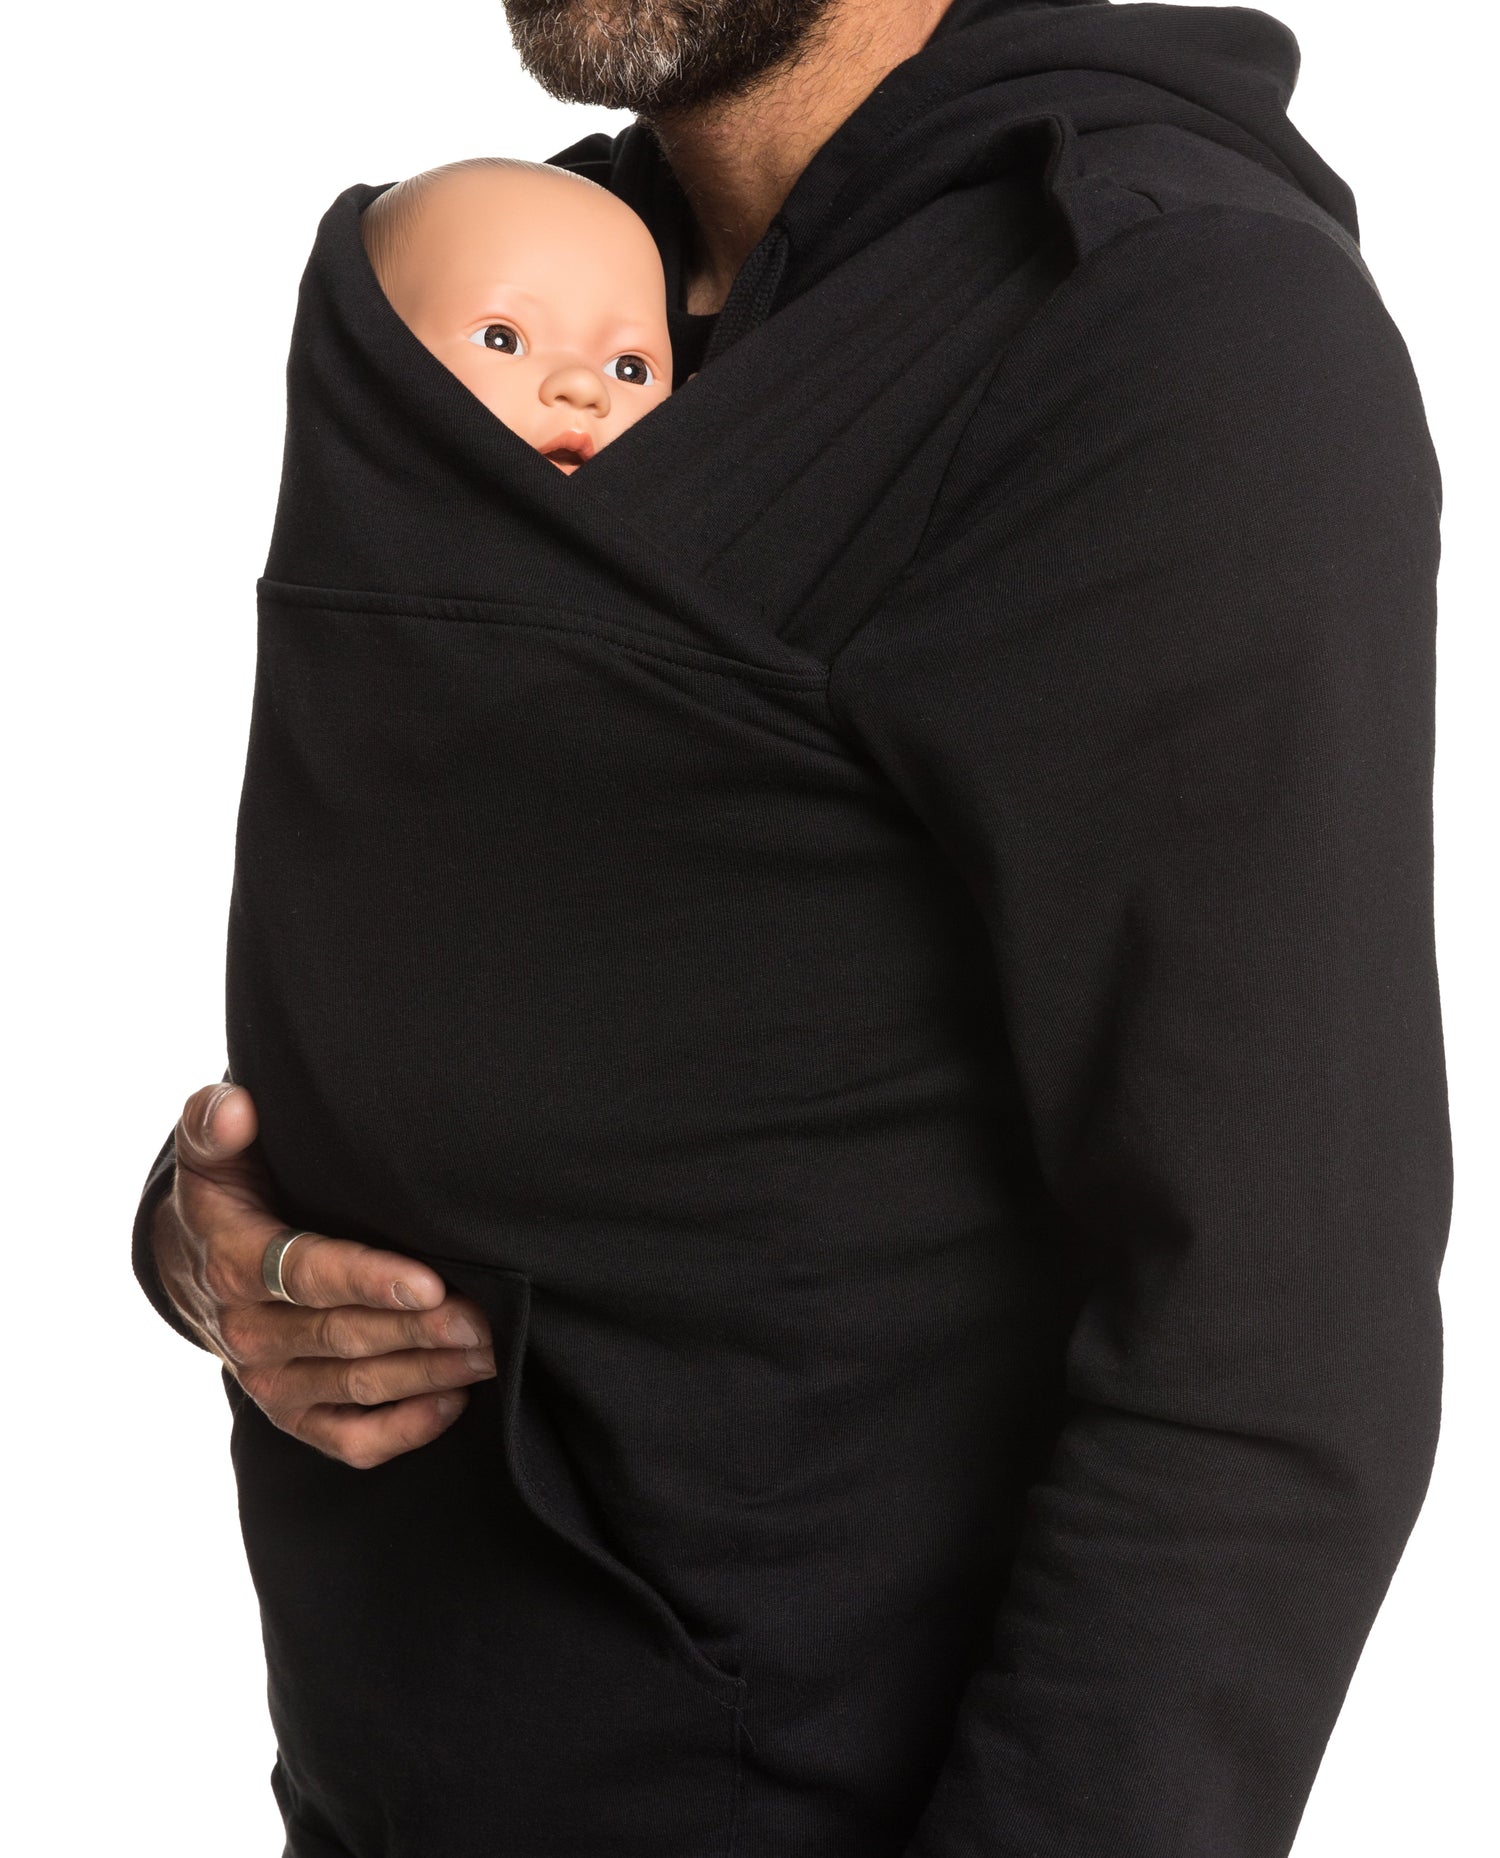 Baby carrier sweatshirt | Daddy Plays | Black Carriers Mama Hangs 